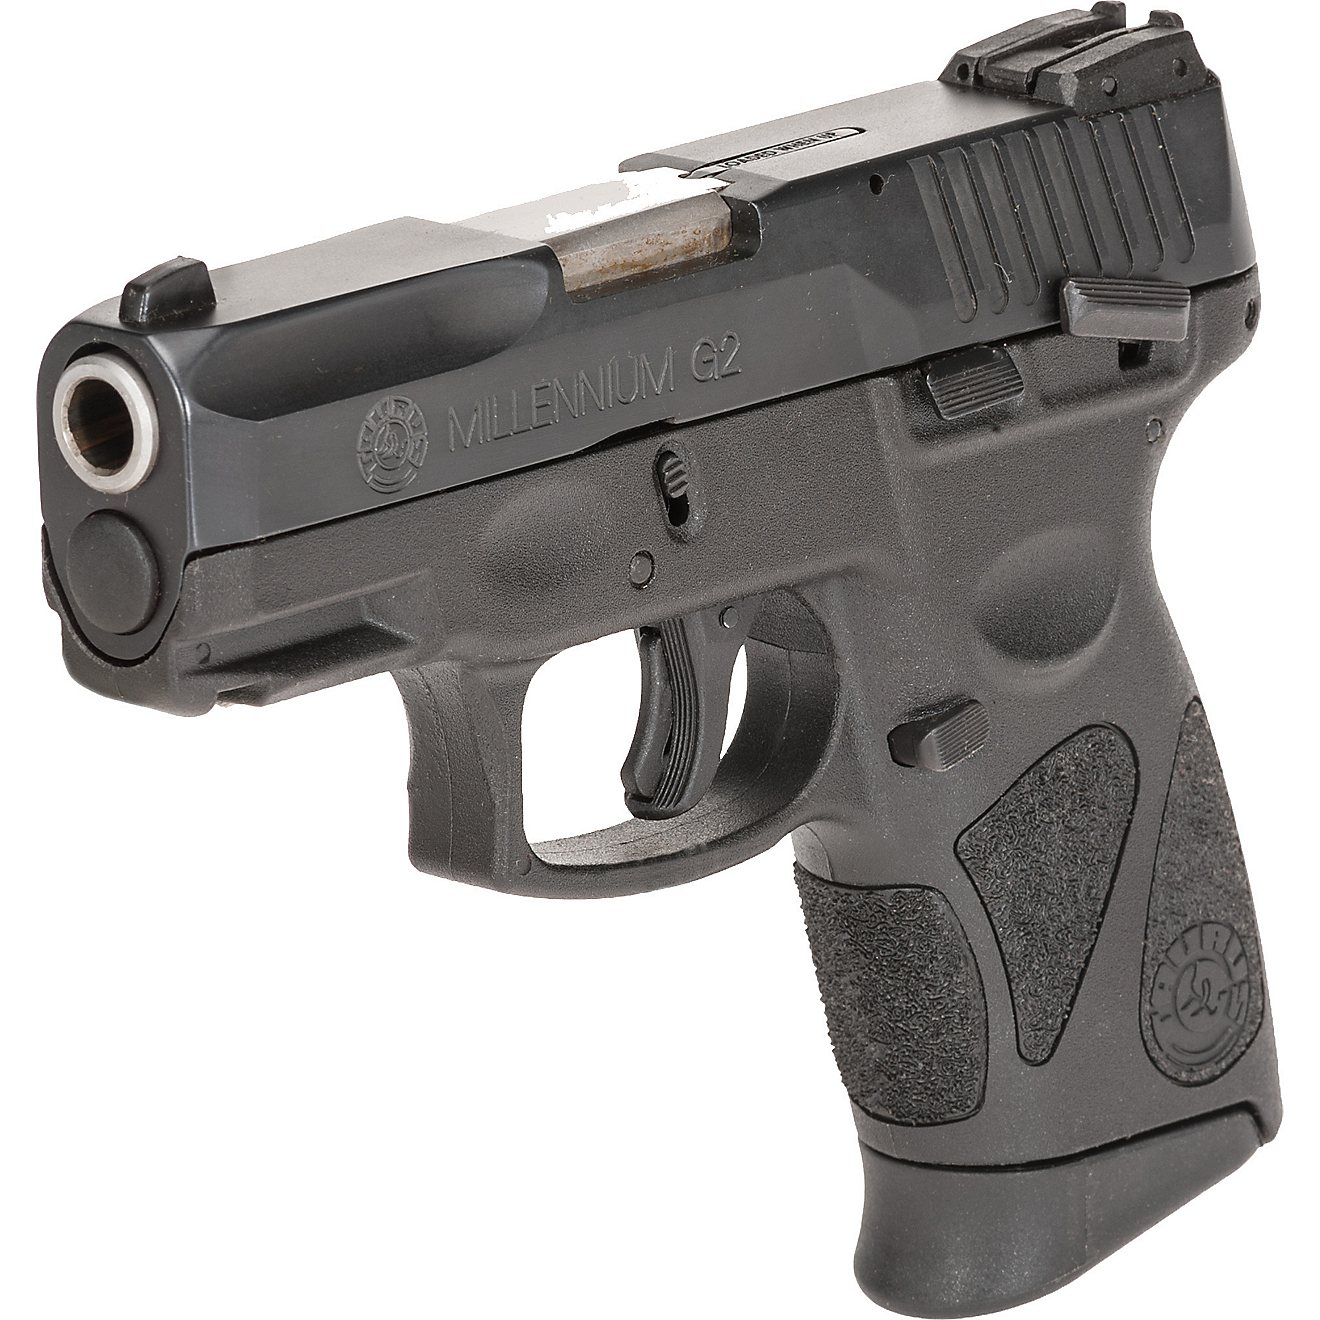 Taurus PT111 Millennium G2 9mm Pistol                                                                                            - view number 1